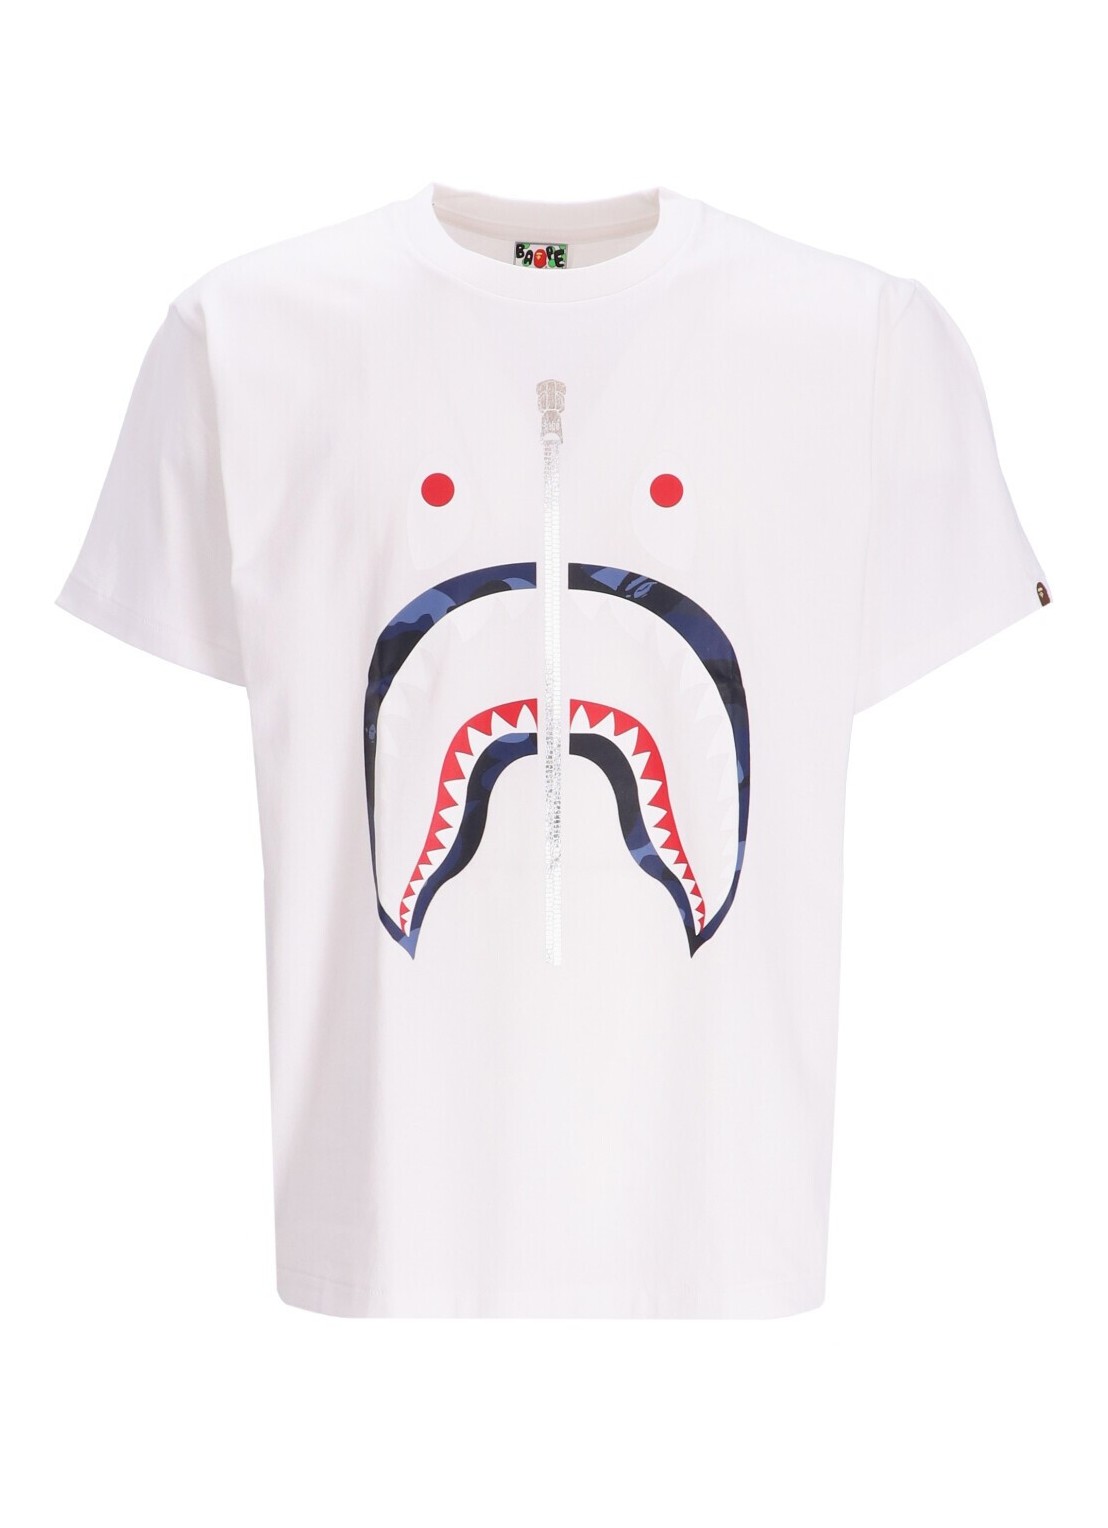 Camiseta bape t-shirt man color camo shark tee m 001tei801016m whxny talla 3XL
 